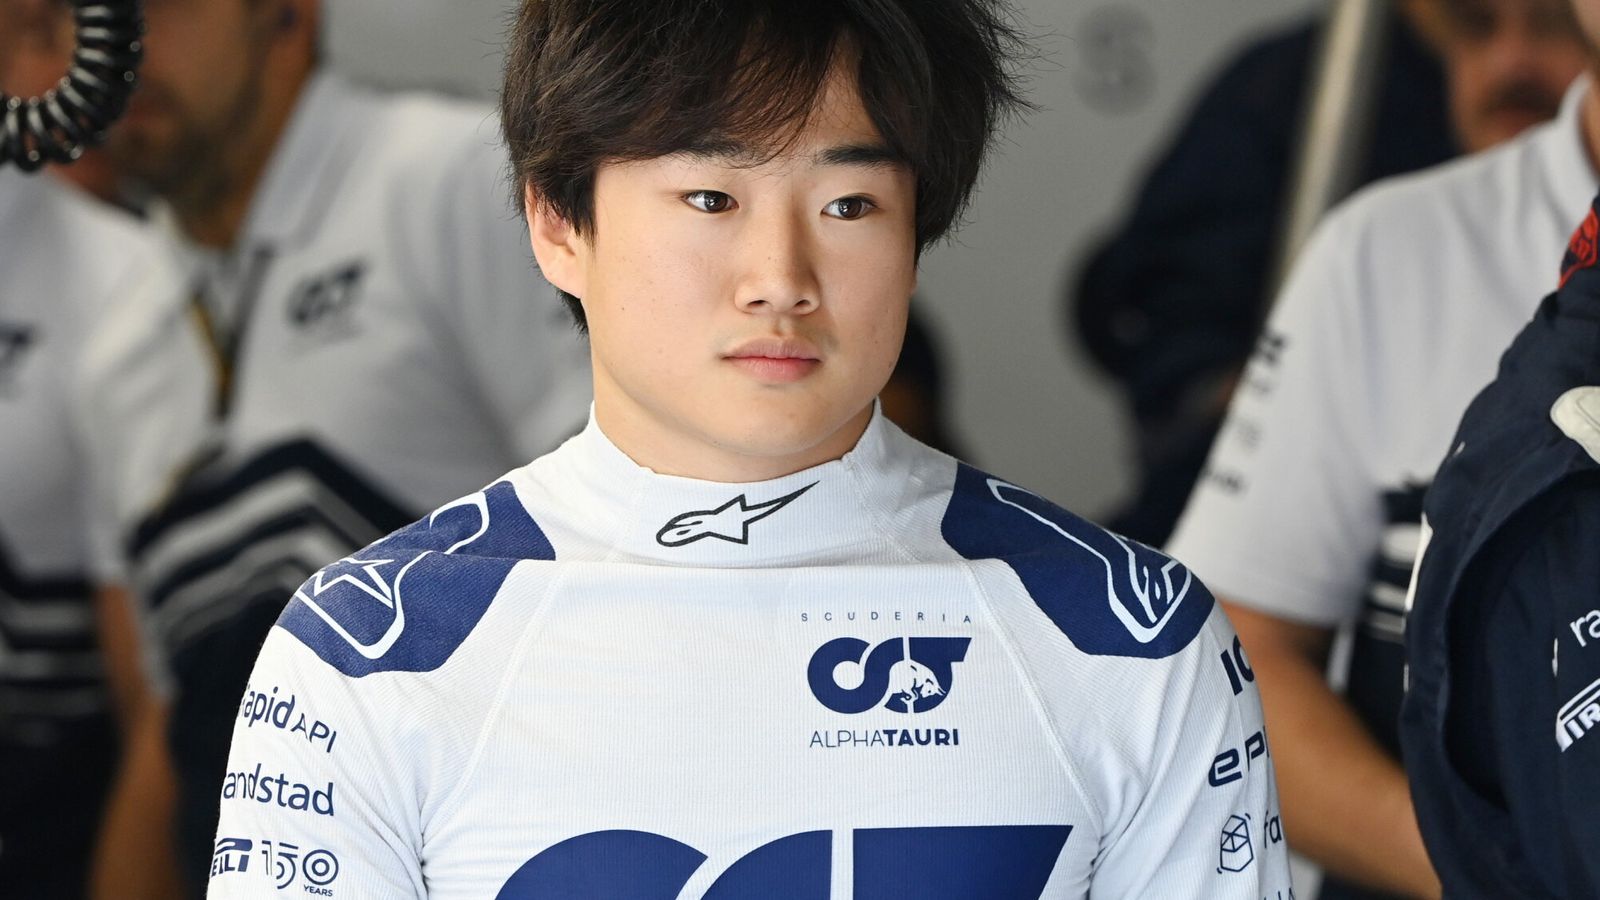 yuki-tsunoda-alphatauri-retain-japanese-driver-for-third-formula-1-season-in-2023